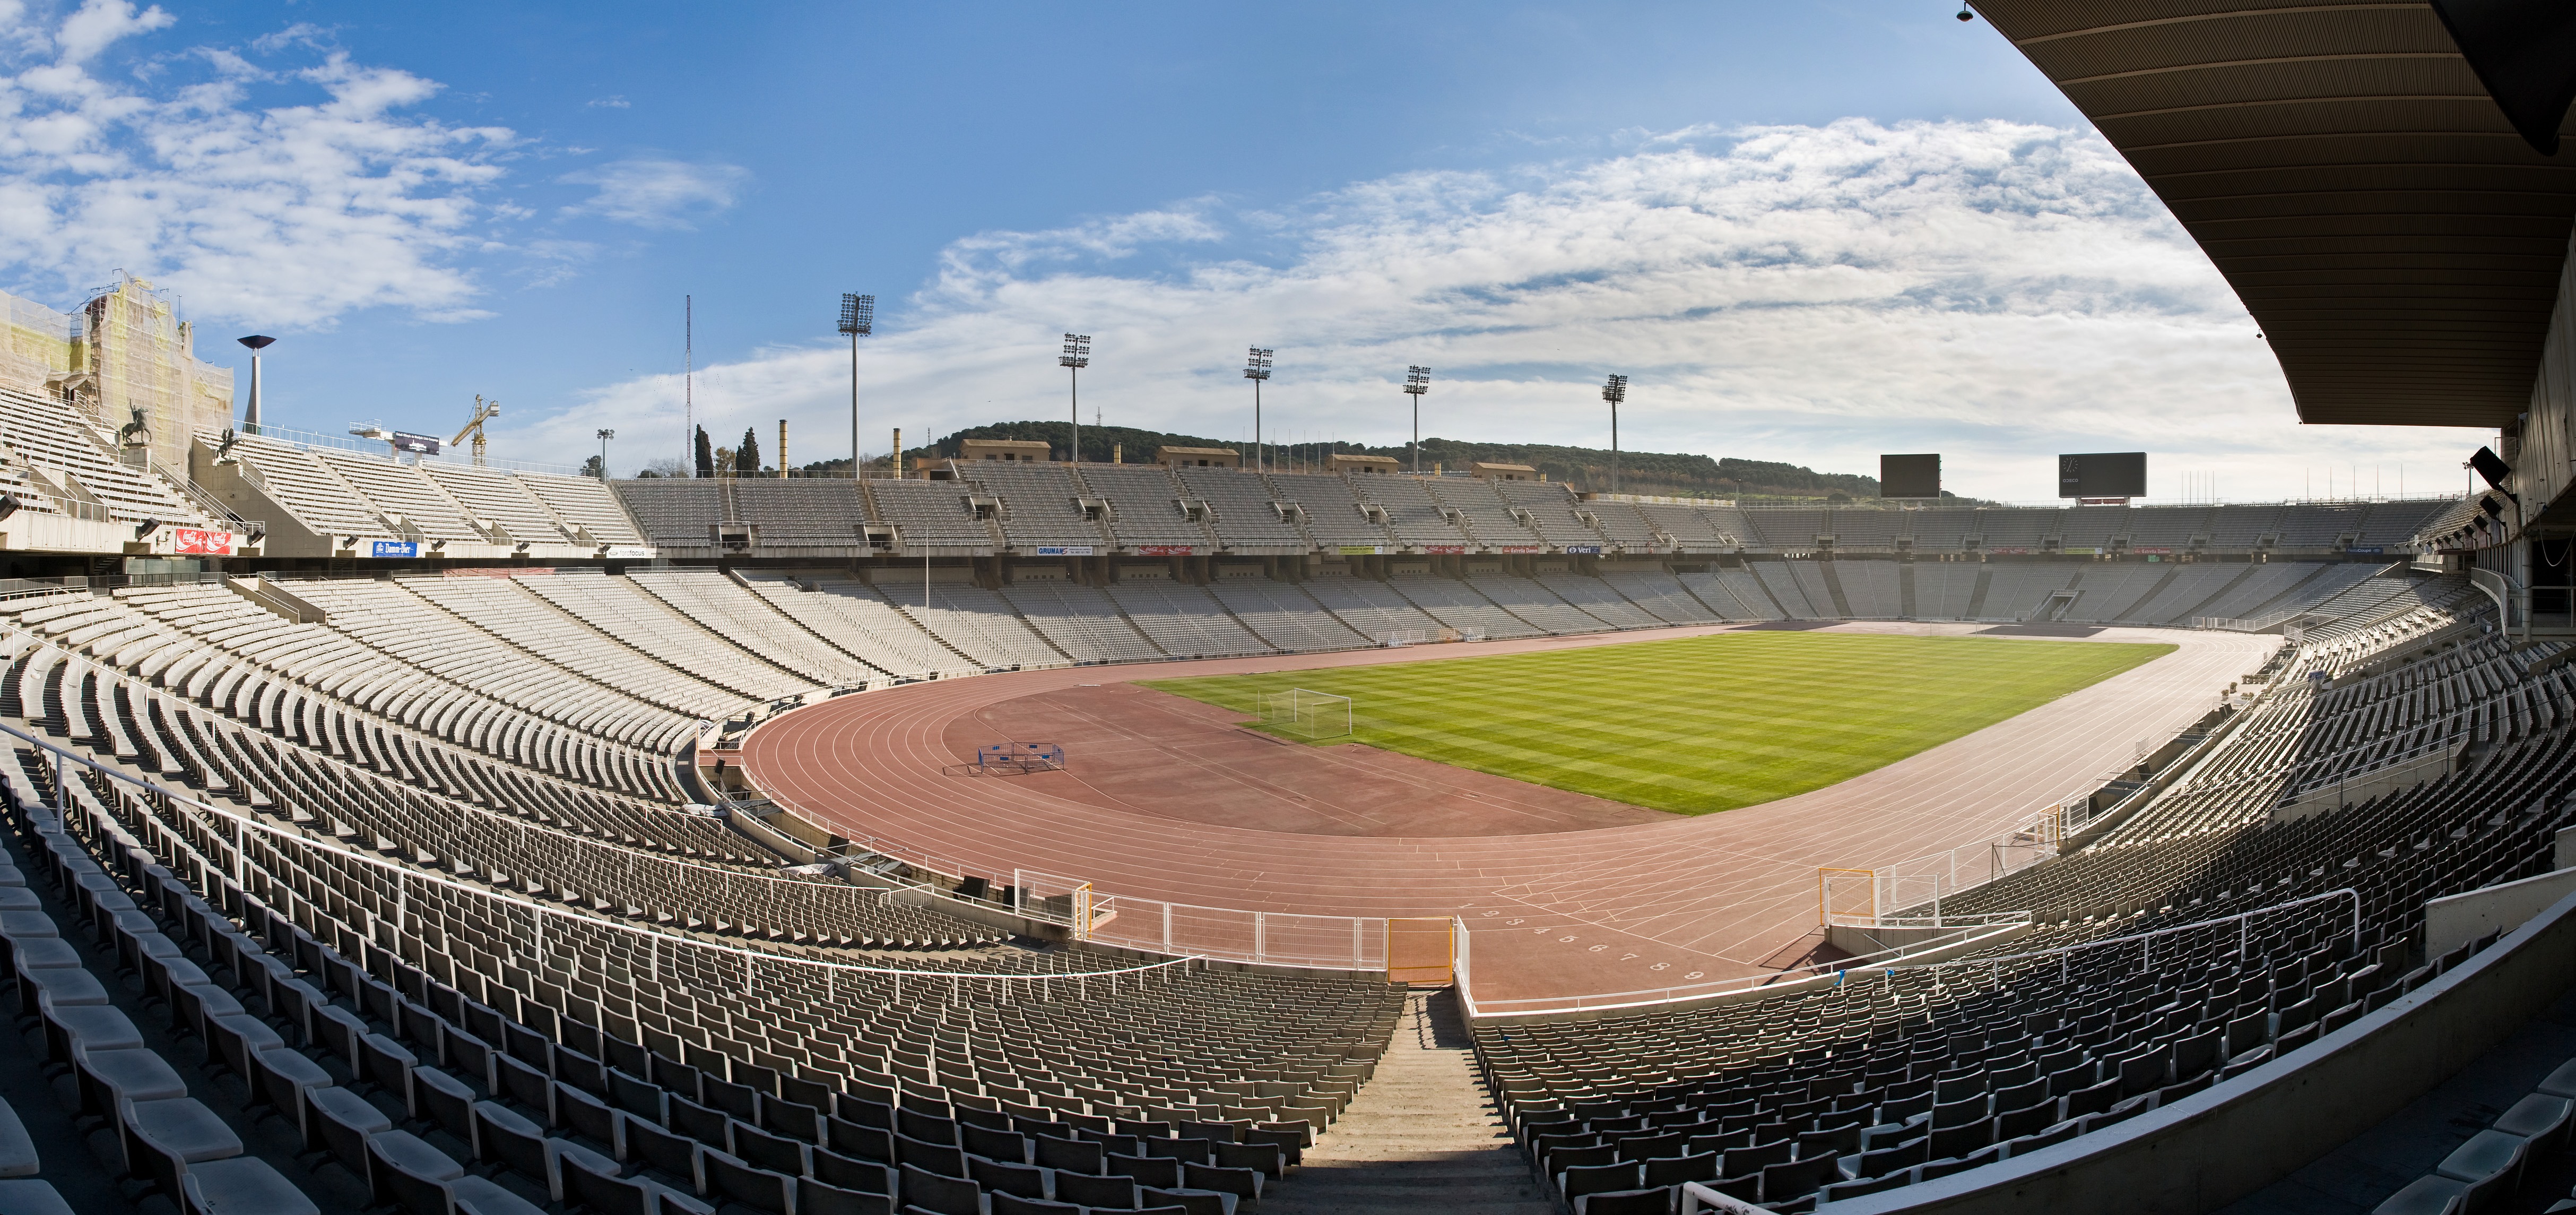 FC Barcelona vs Real Madrid at Estadi Olimpic Lluis Companys on 29/10/23 Sun 17:00 - Football Ticket Net